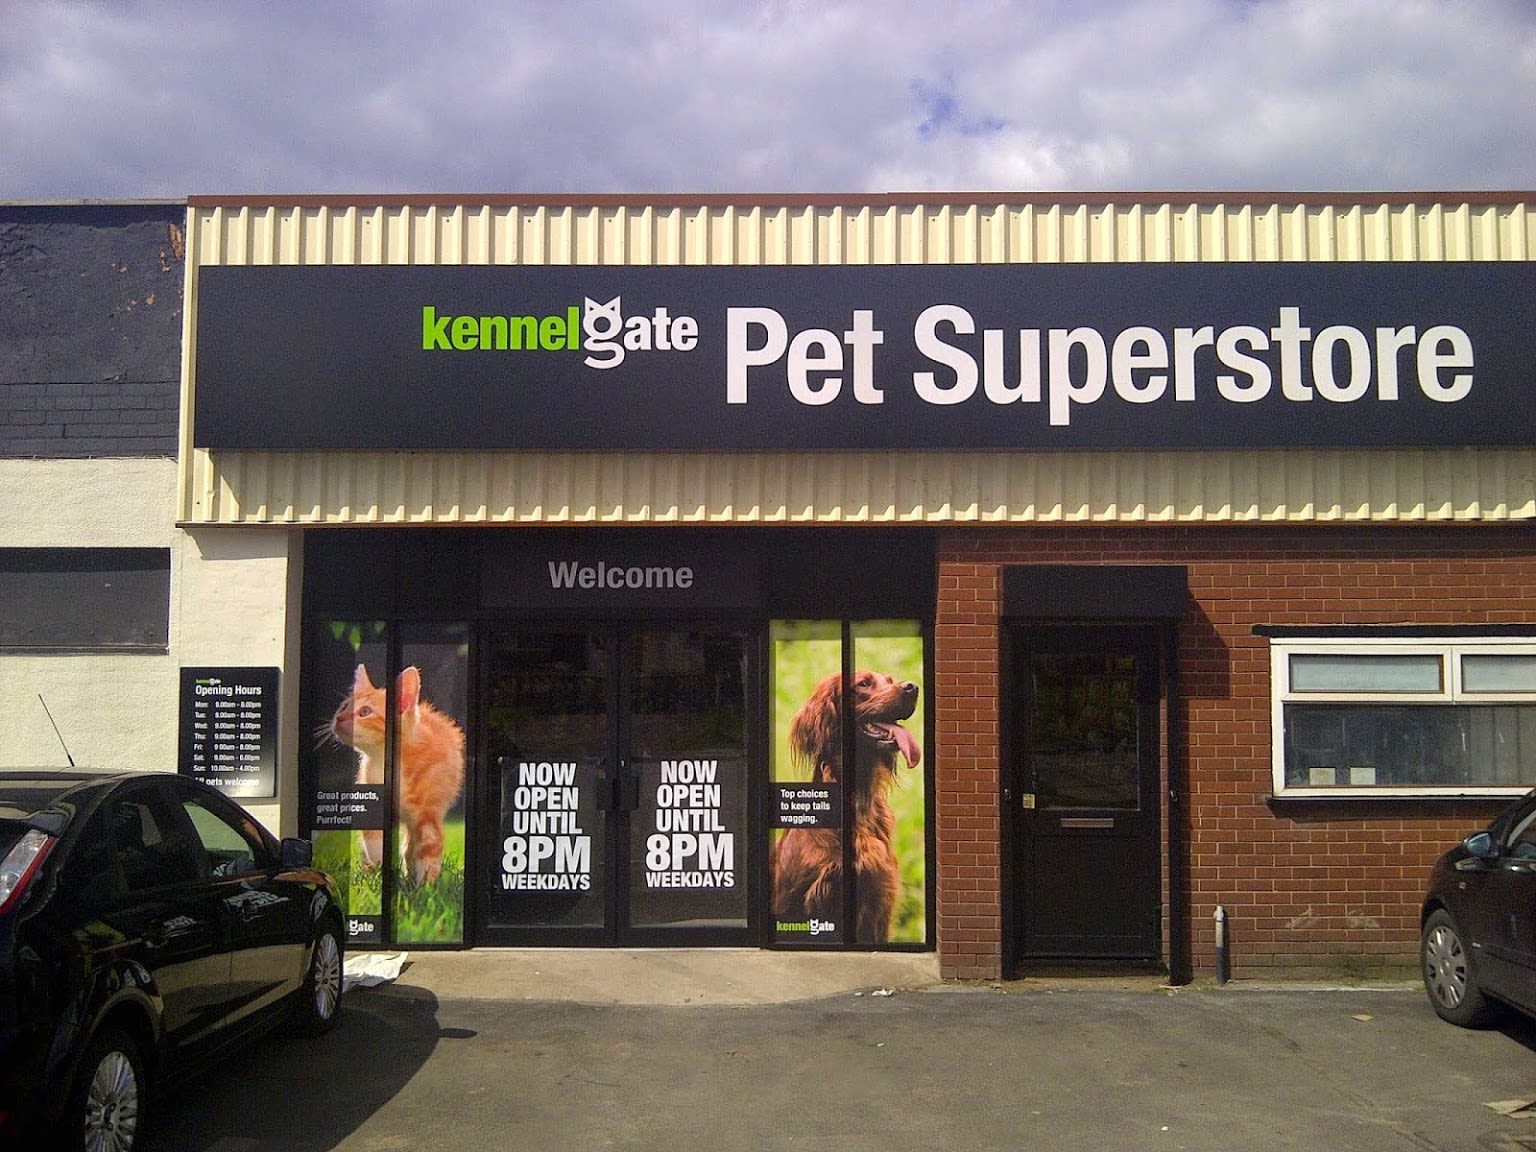 Kennelgate Pet Superstore